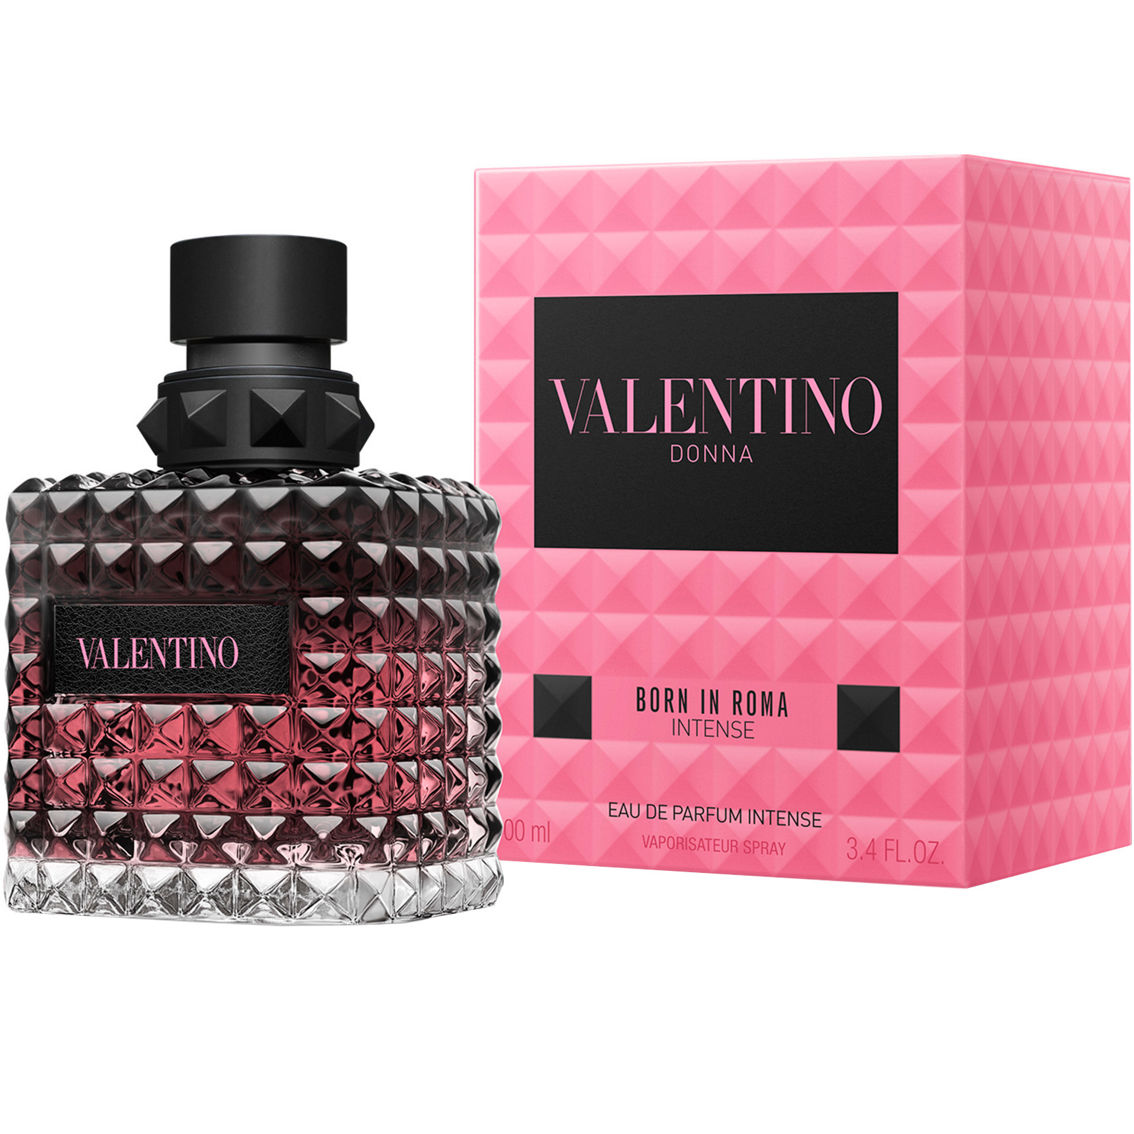 Valentino Donna Born In Roma Intense Eau de Parfum Spray - Image 3 of 8